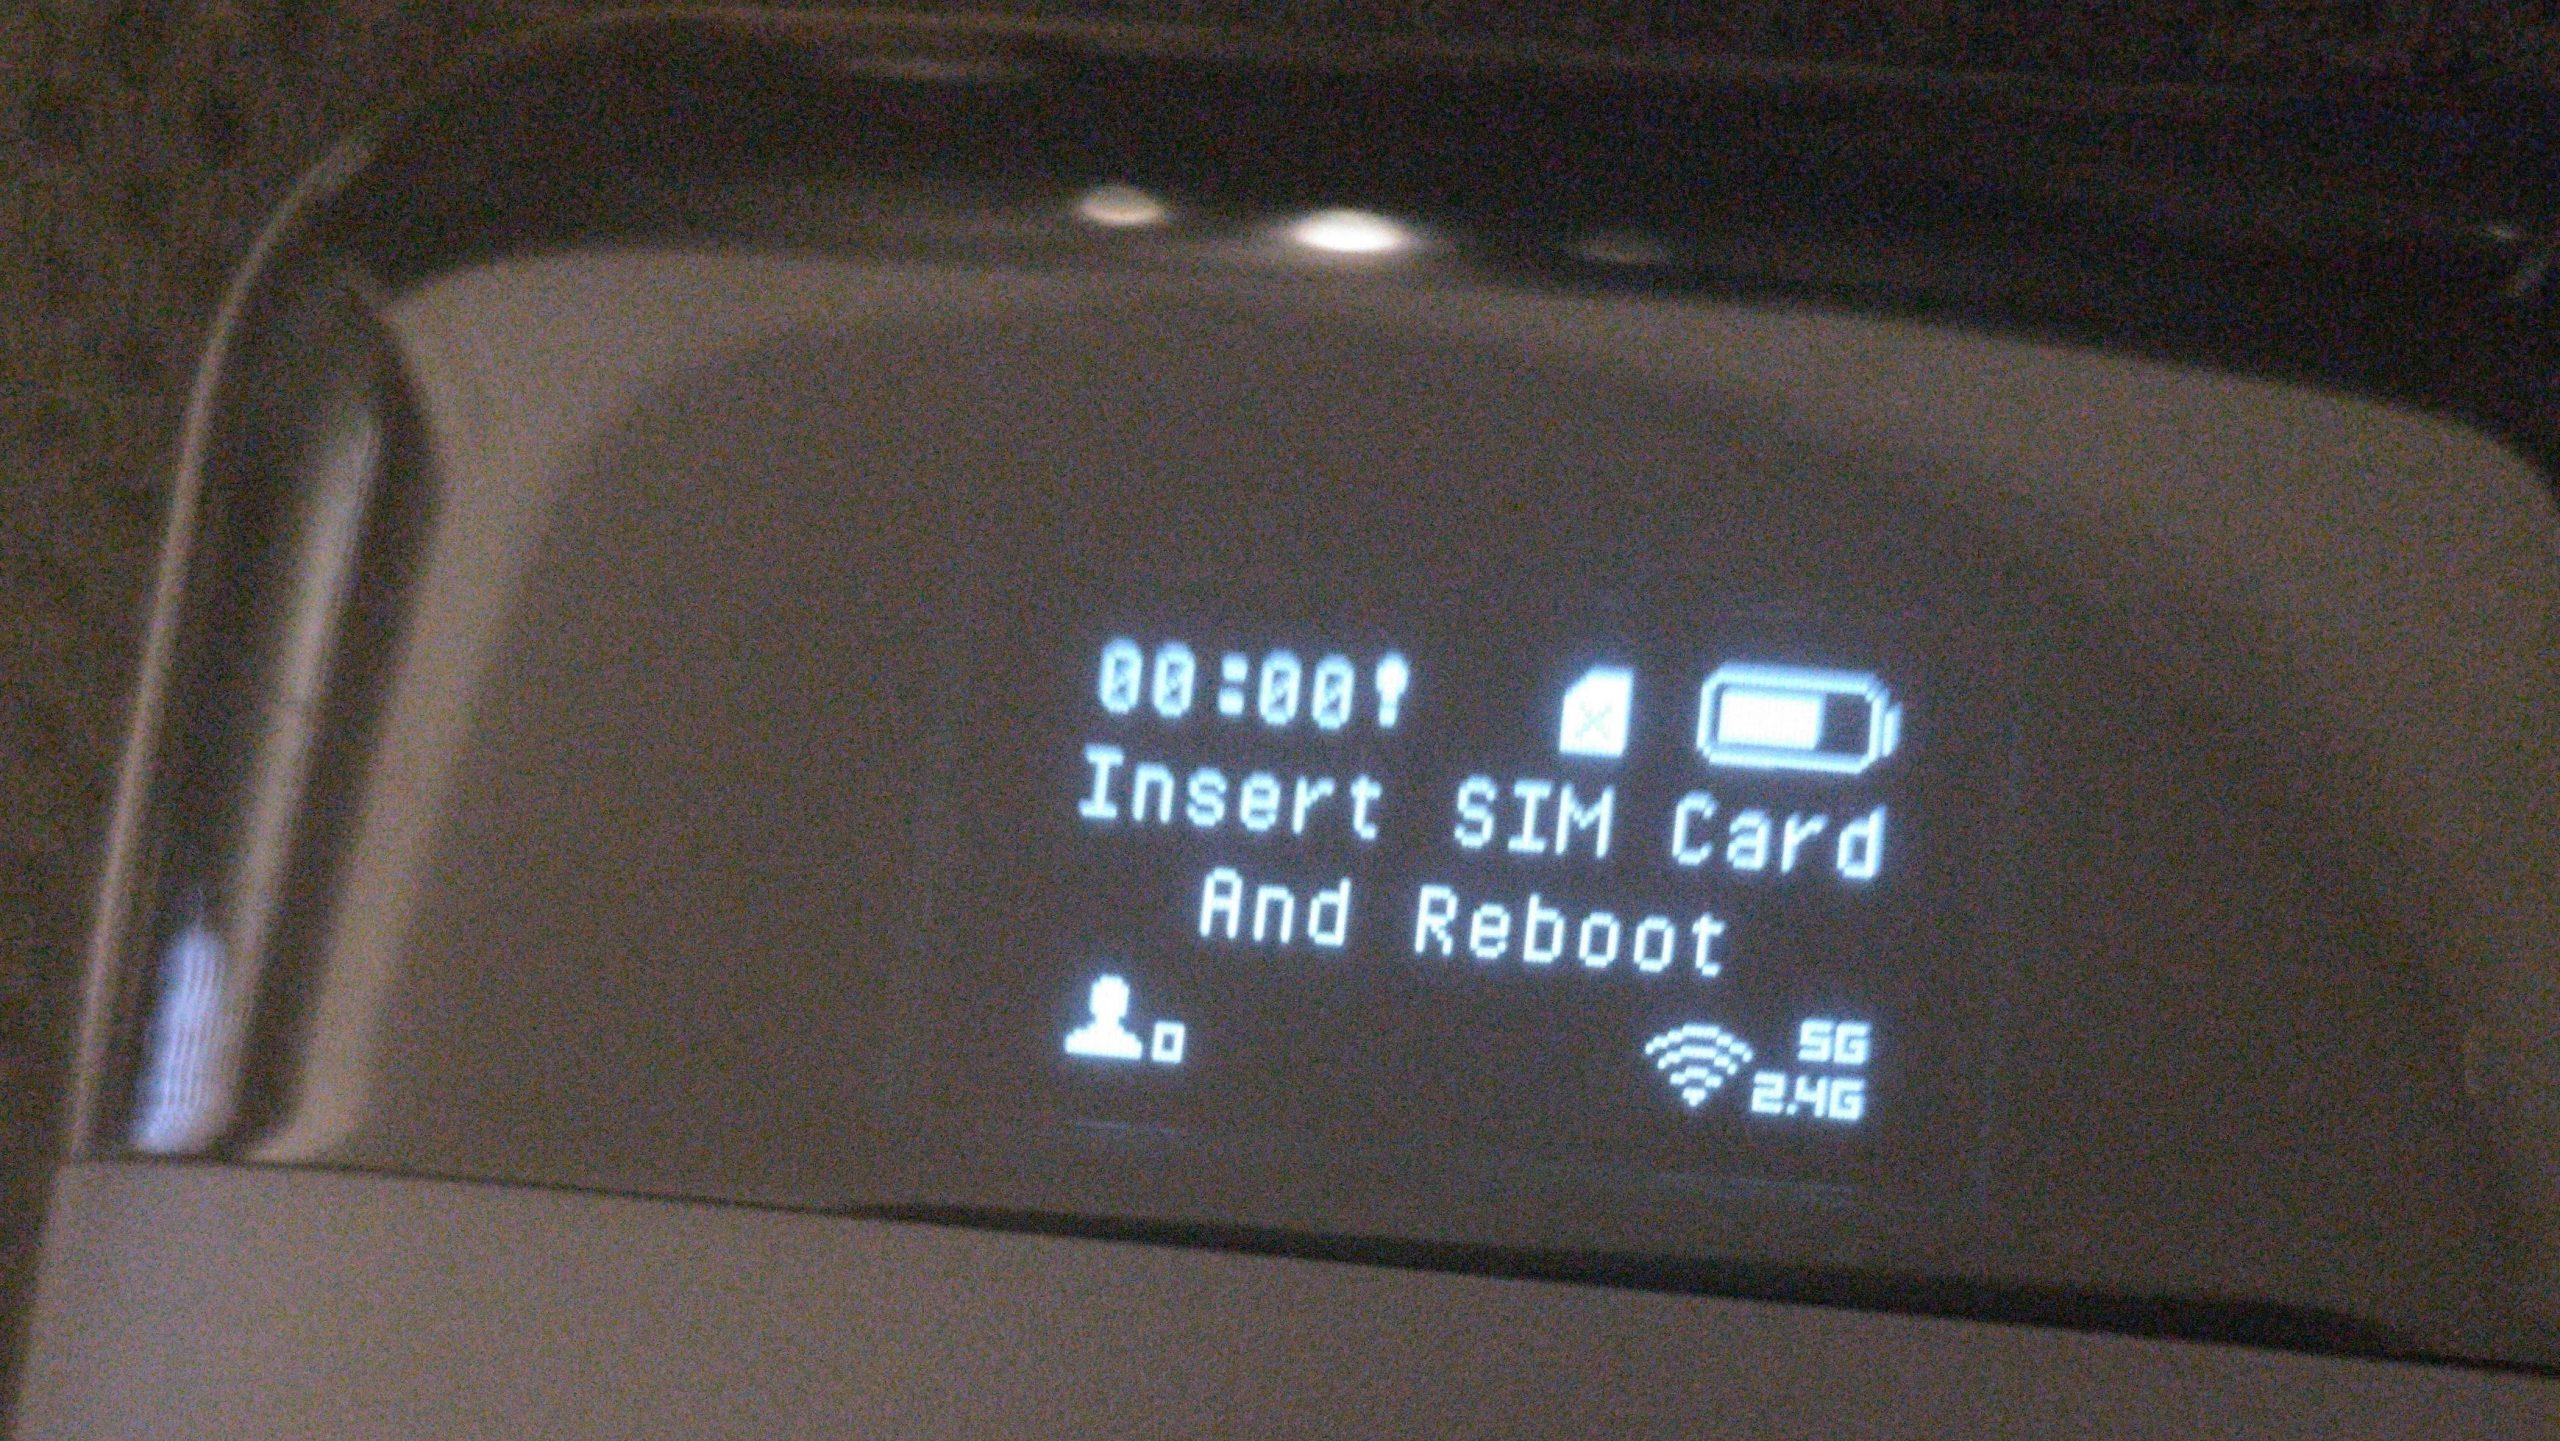 GL.iNet Mudi G-E750 Router - Inser SIM Card and Reboot auf dem Display